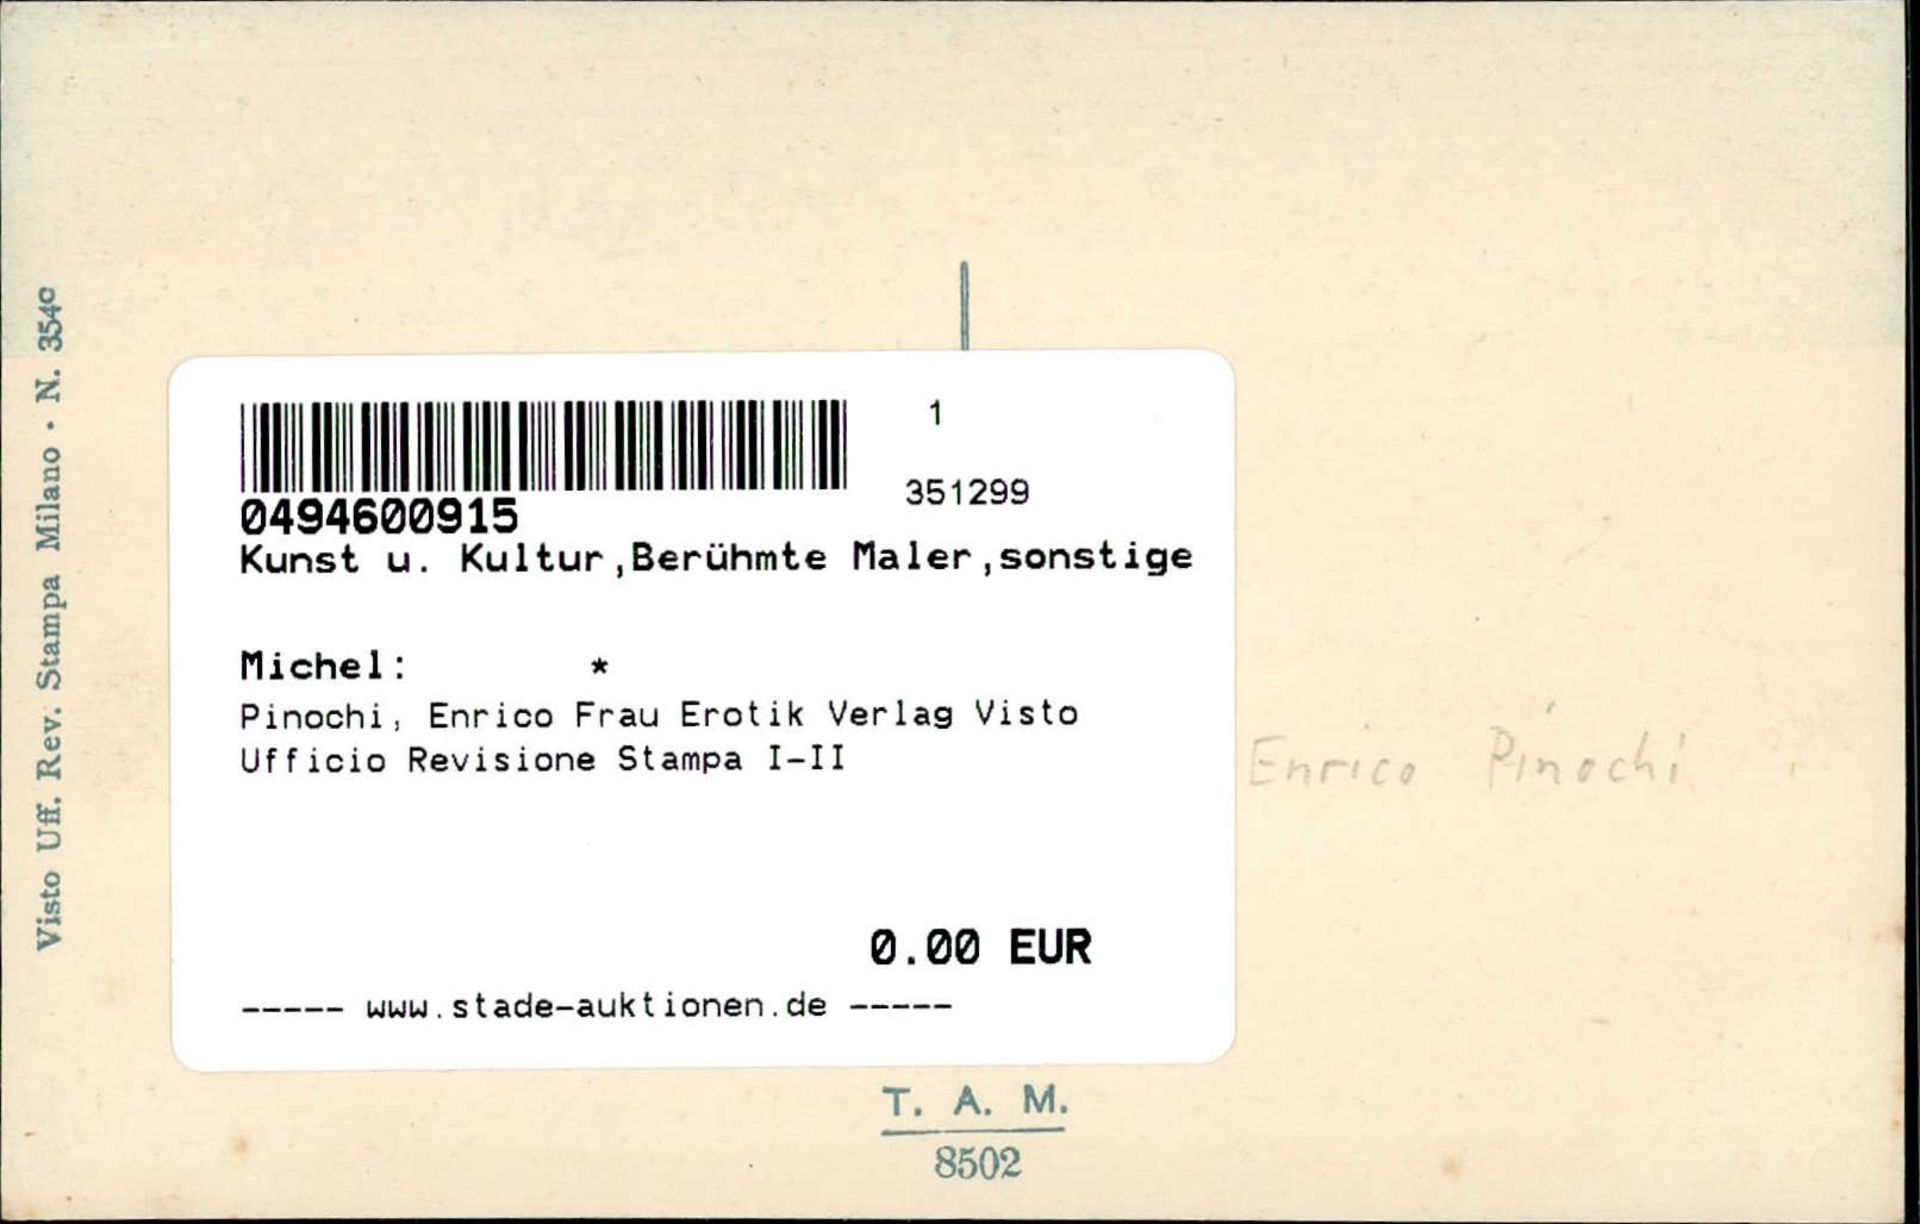 Pinochi, Enrico Frau Erotik Verlag Visto Ufficio Revisione Stampa I-II - Bild 2 aus 2